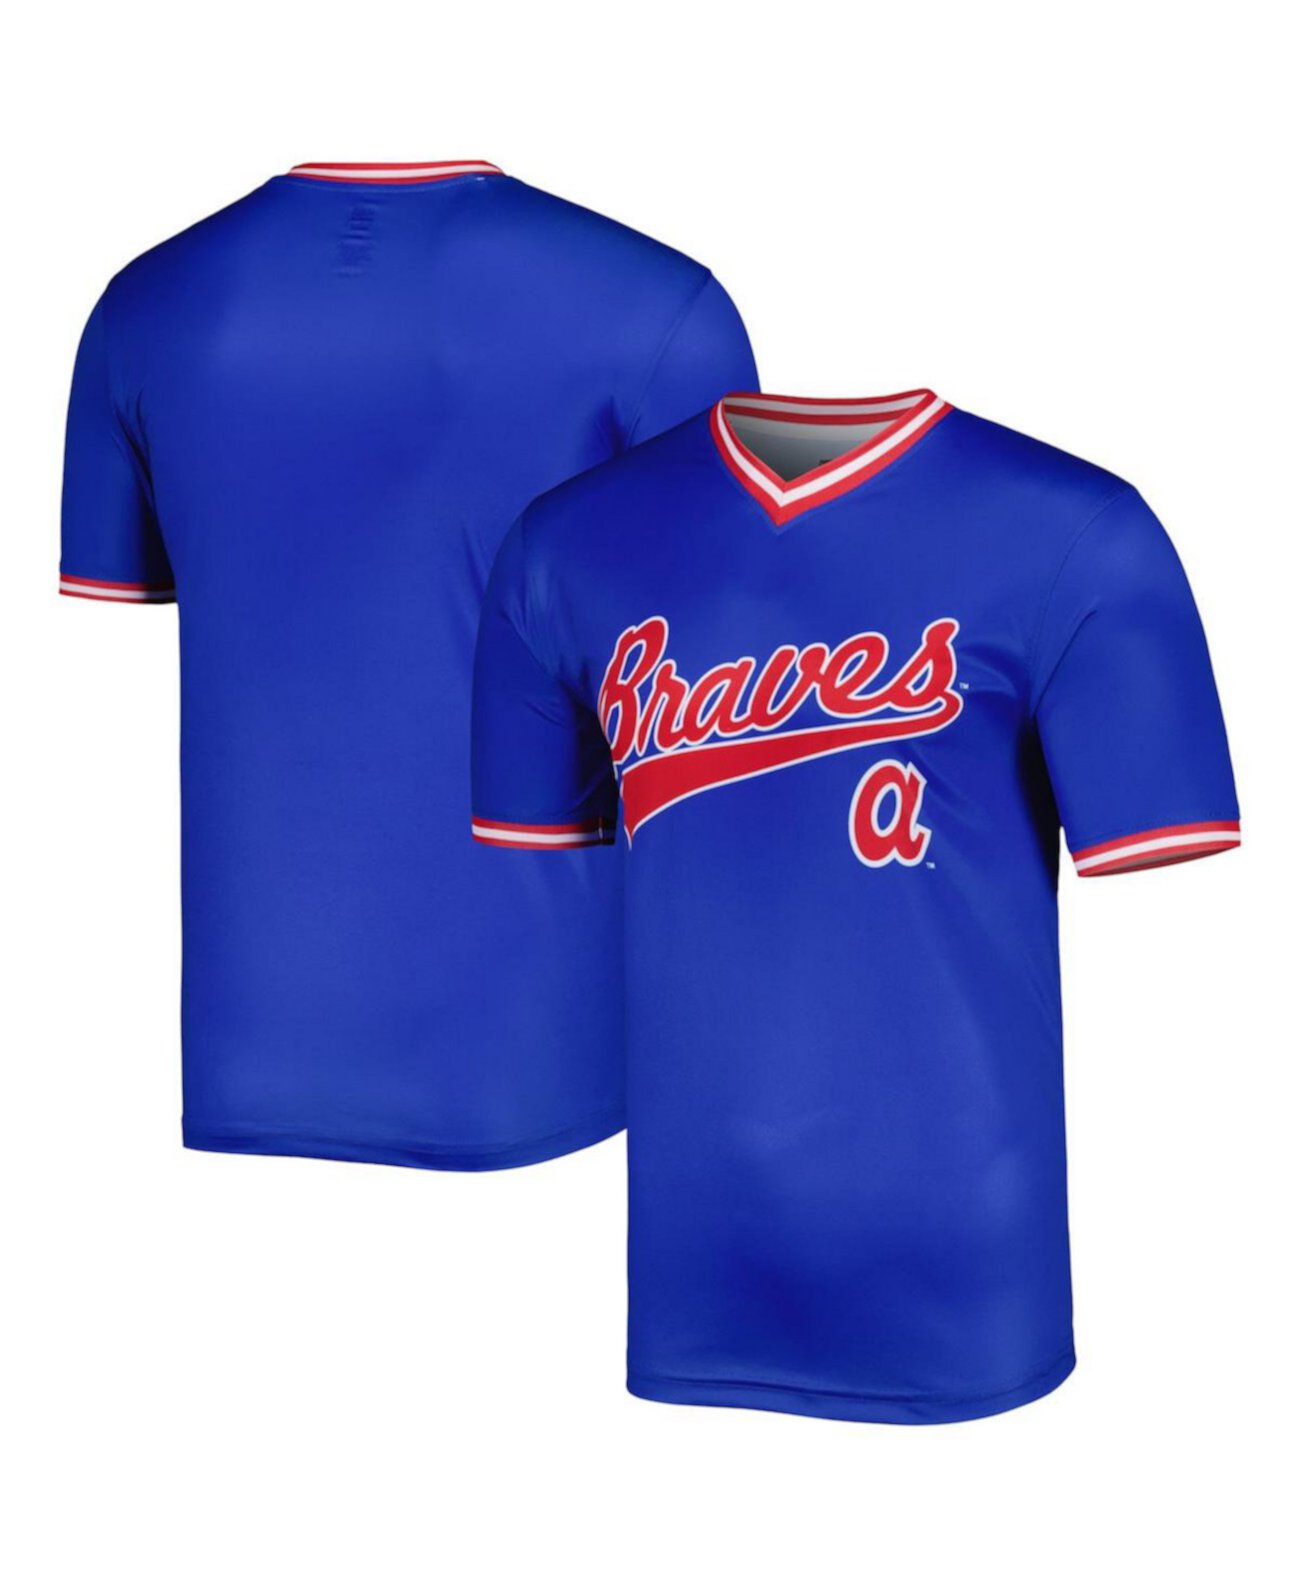 Мужская футболка команды Royal Atlanta Braves Cooperstown Collection Team Stitches